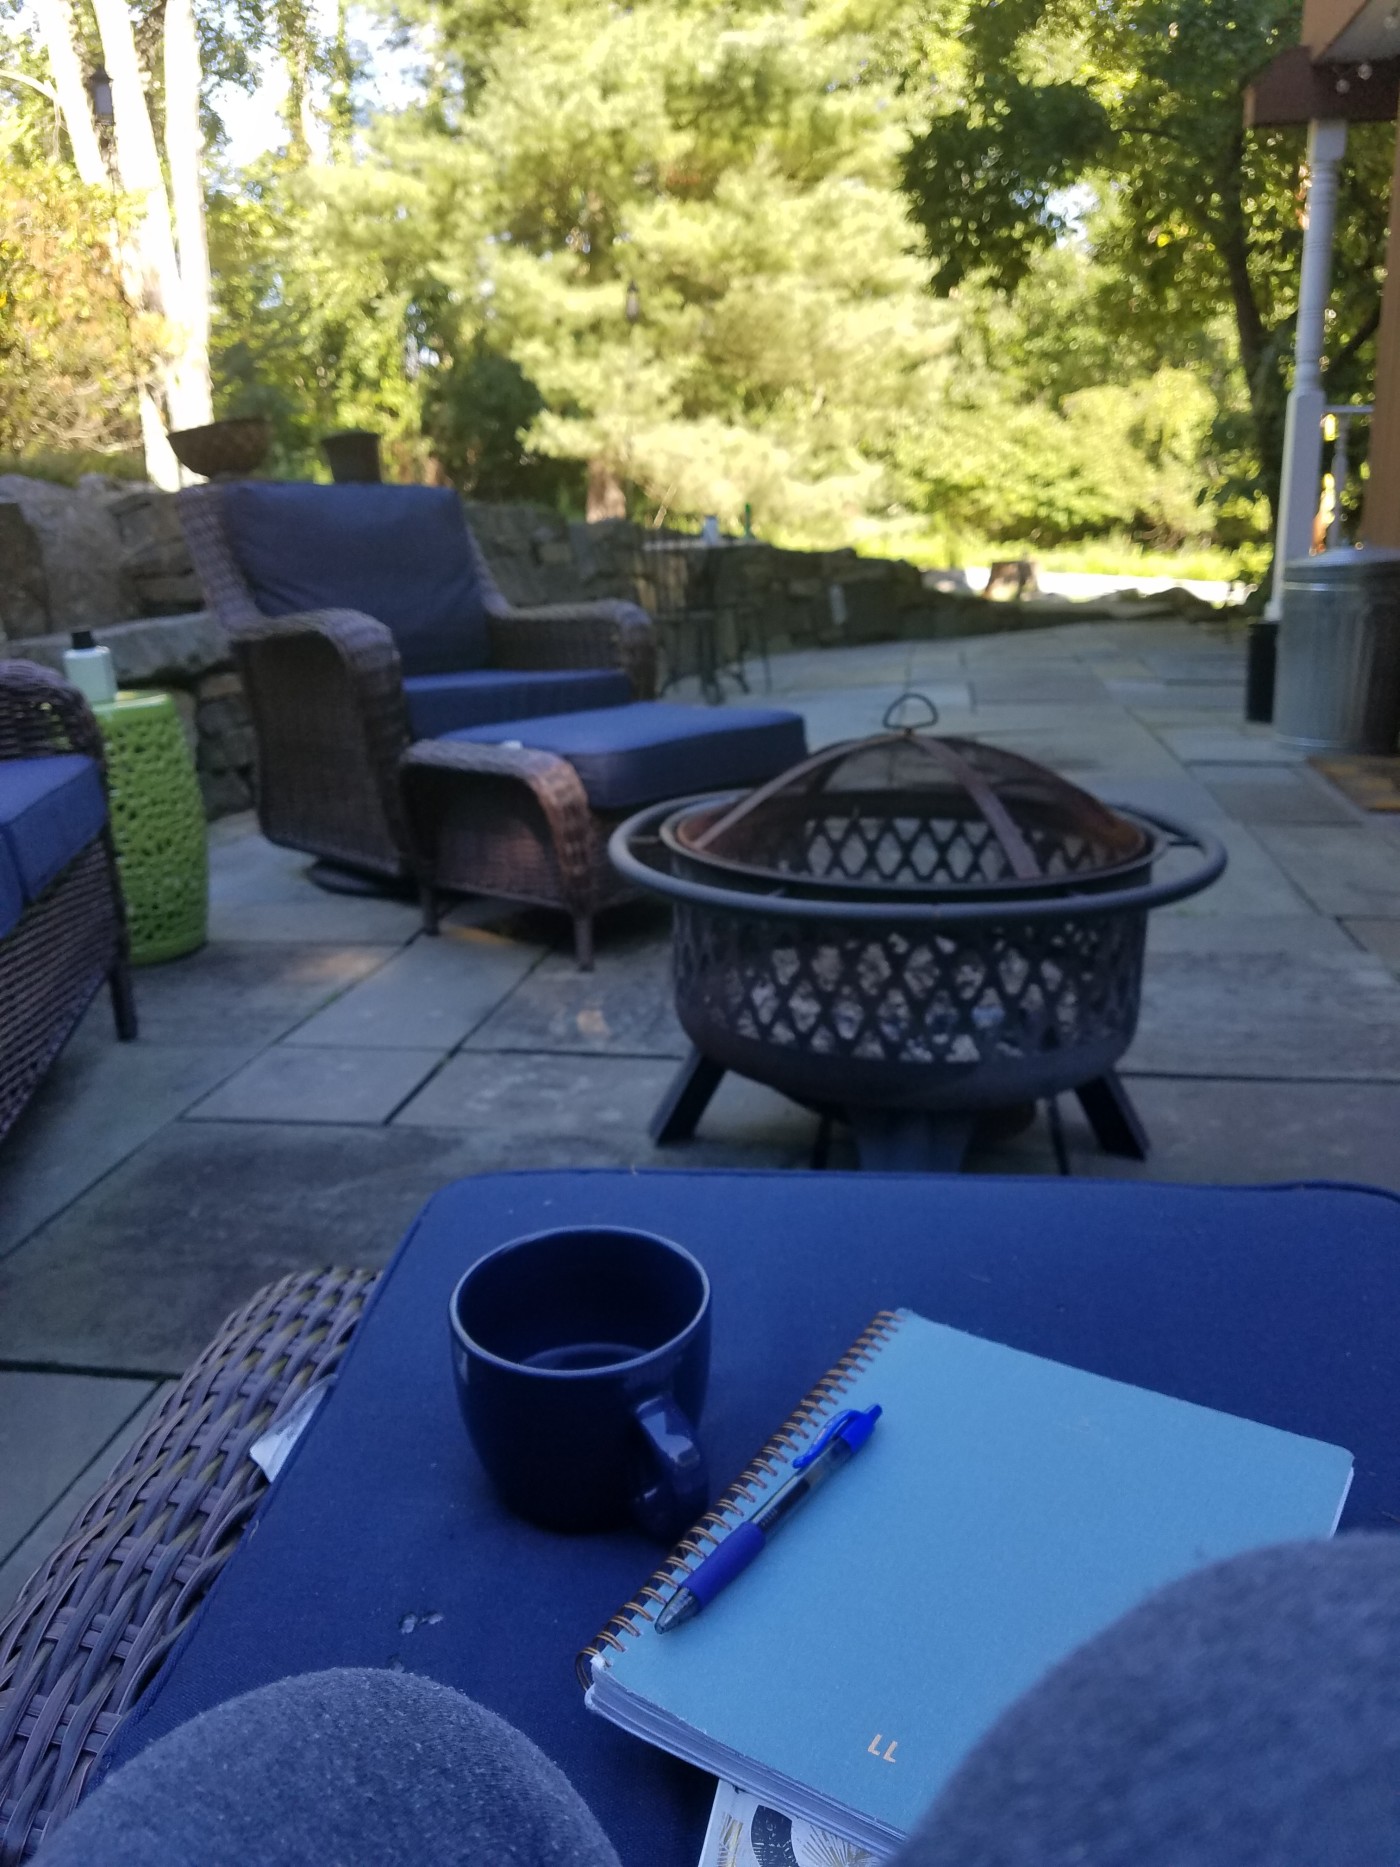 A notebook and mug outside on a patio